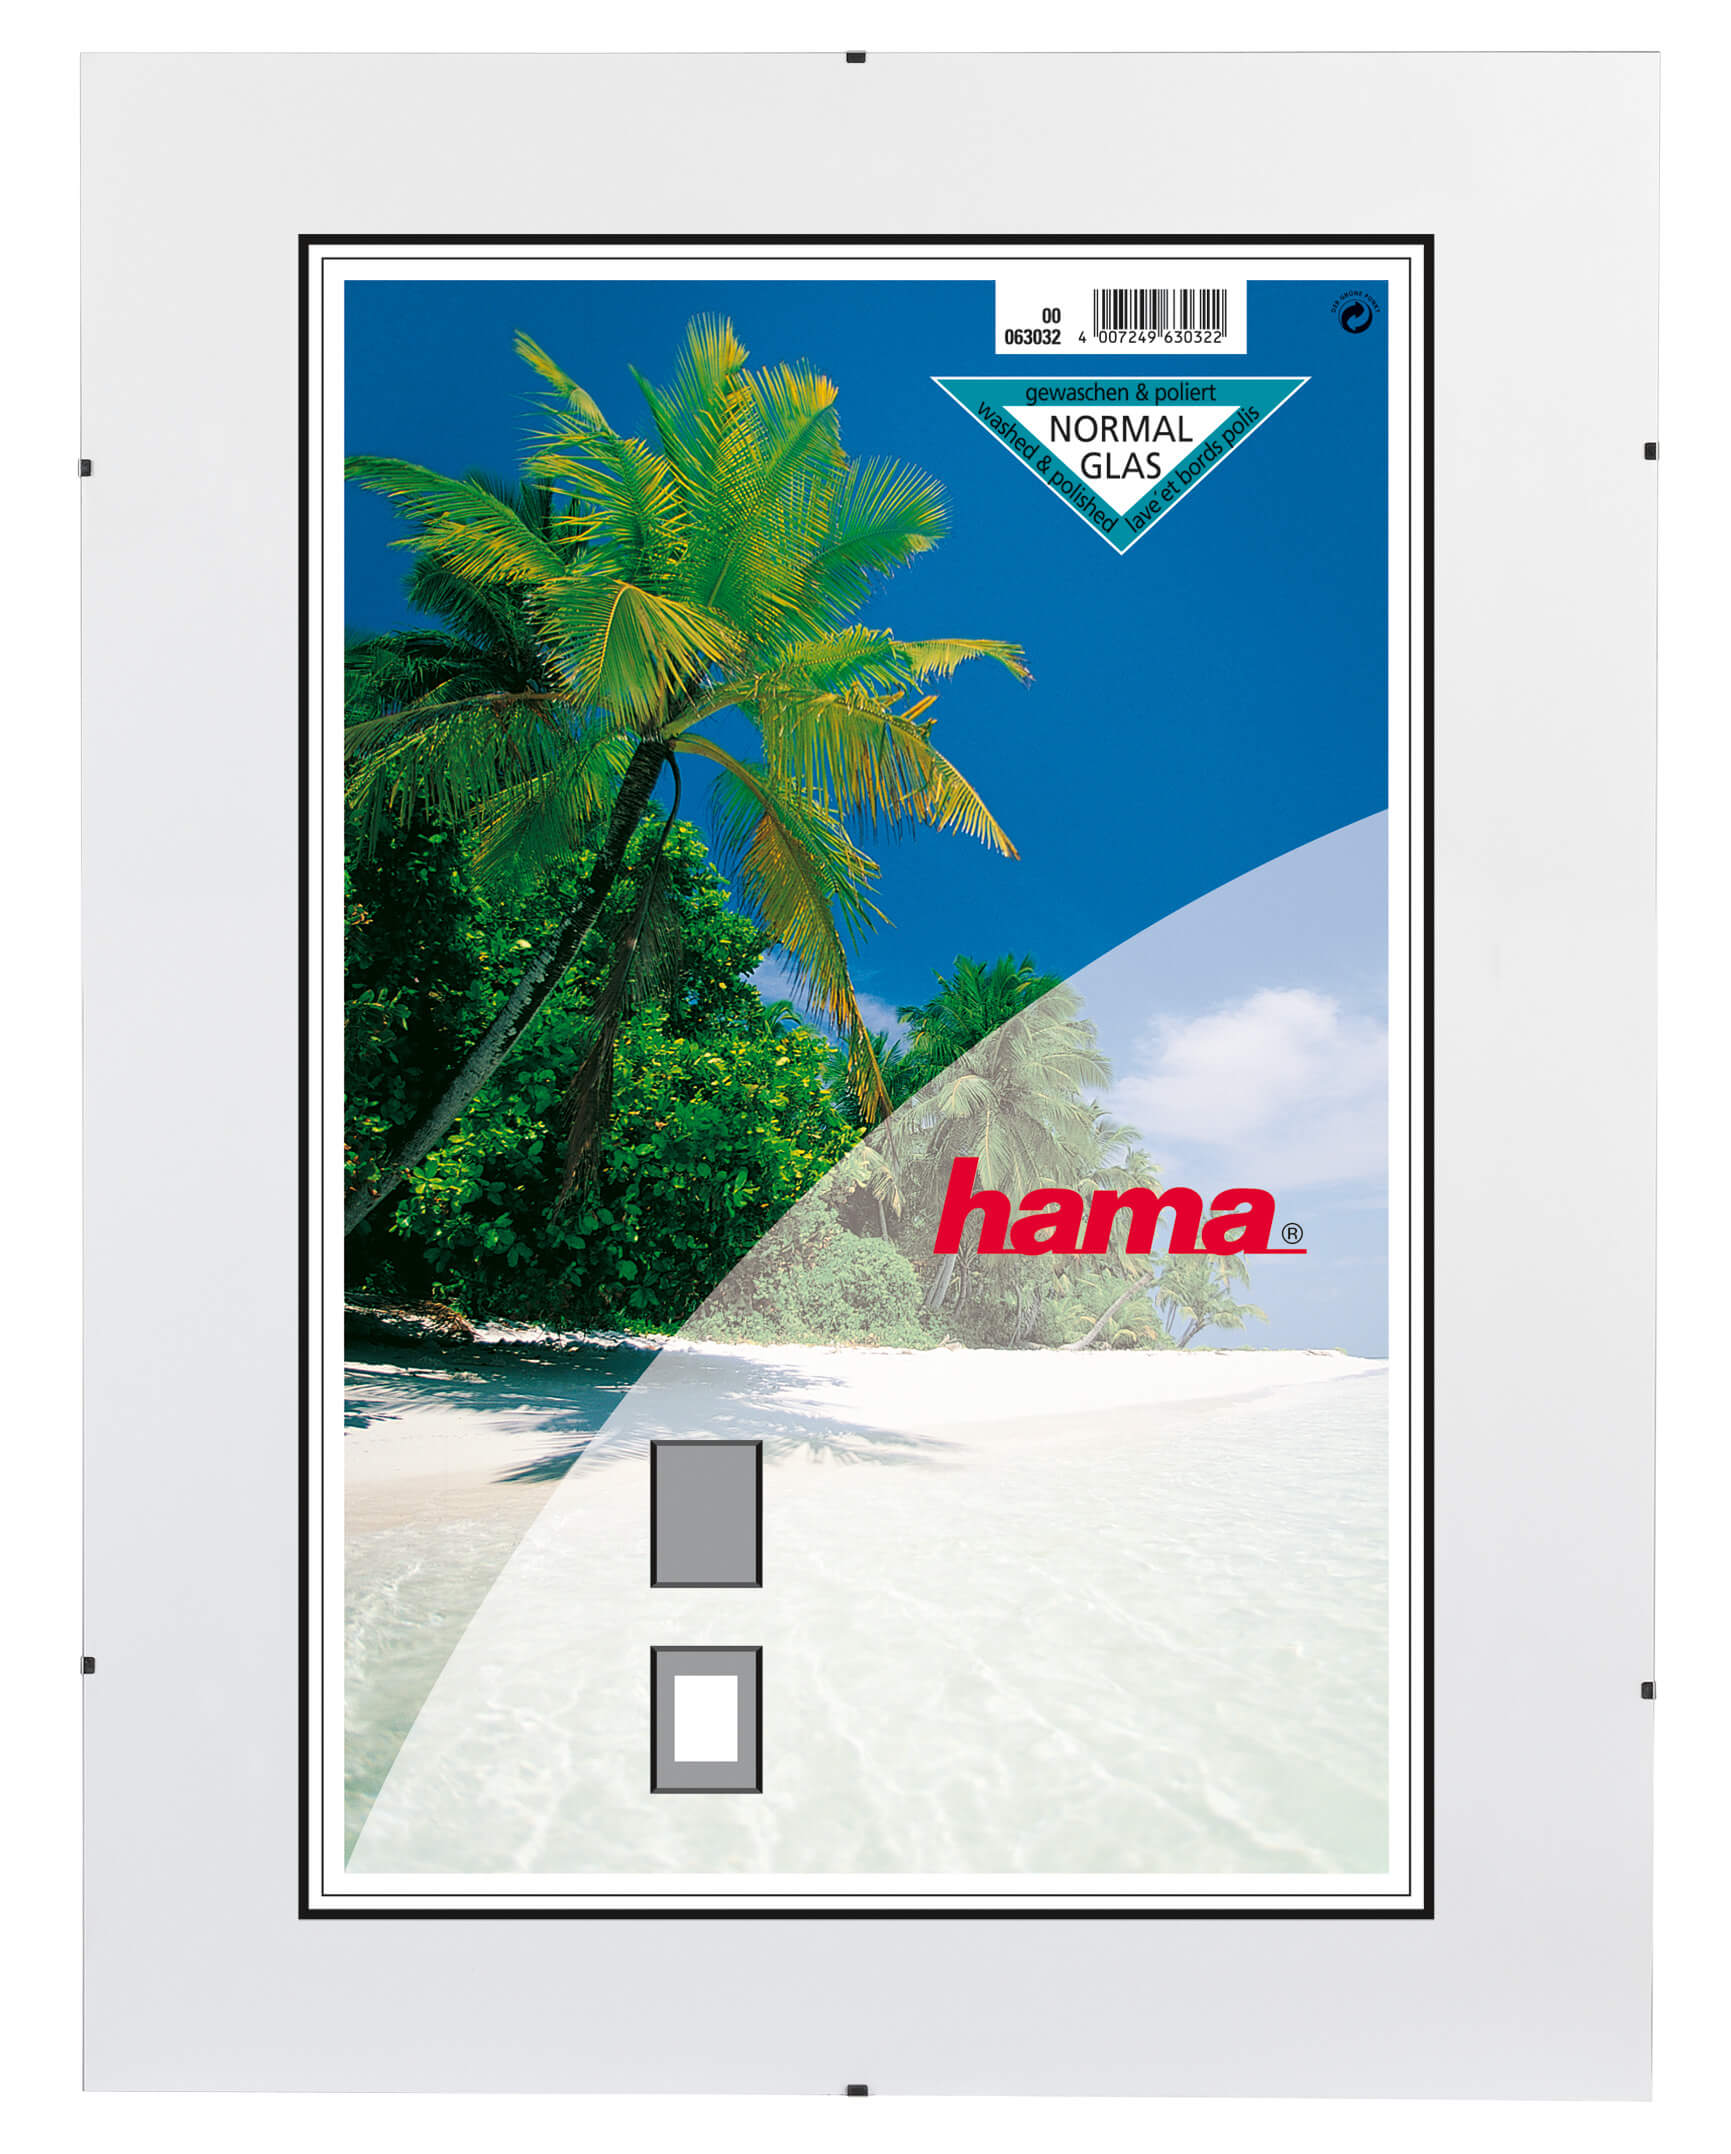 HAMA Clip-Fix Frameless Picture Ho lder, normal glass, 30 x 45 cm